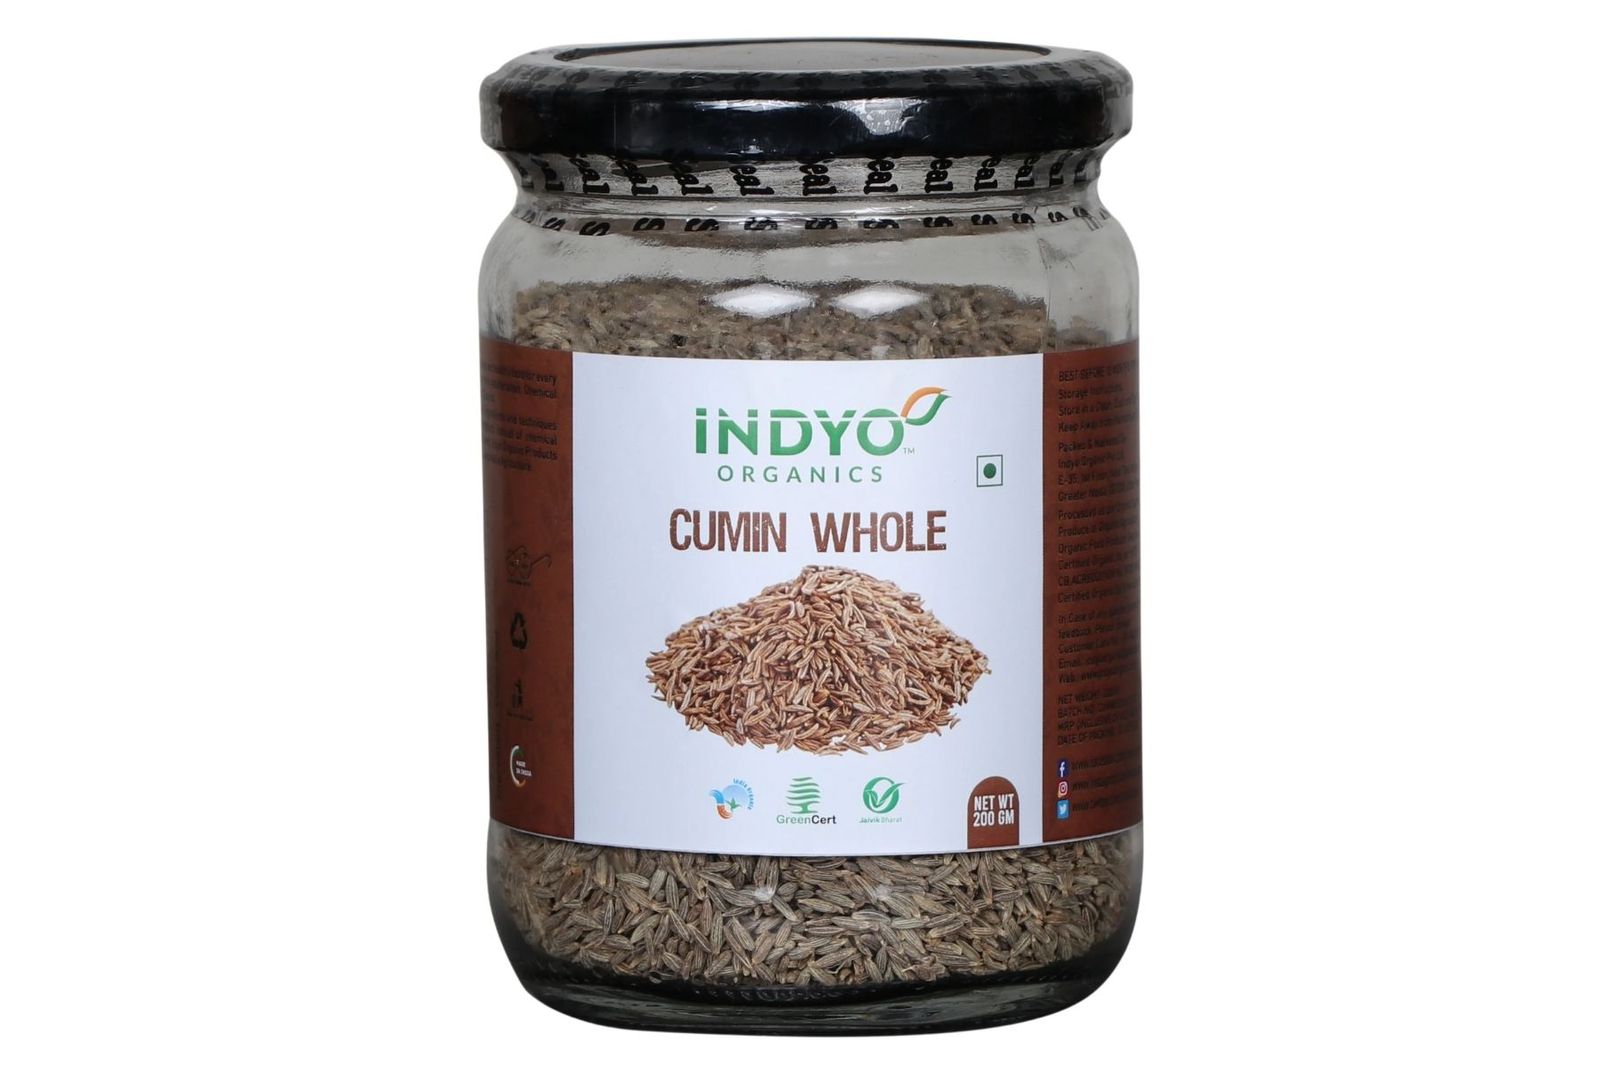 Indyo Organics Cumin Whole